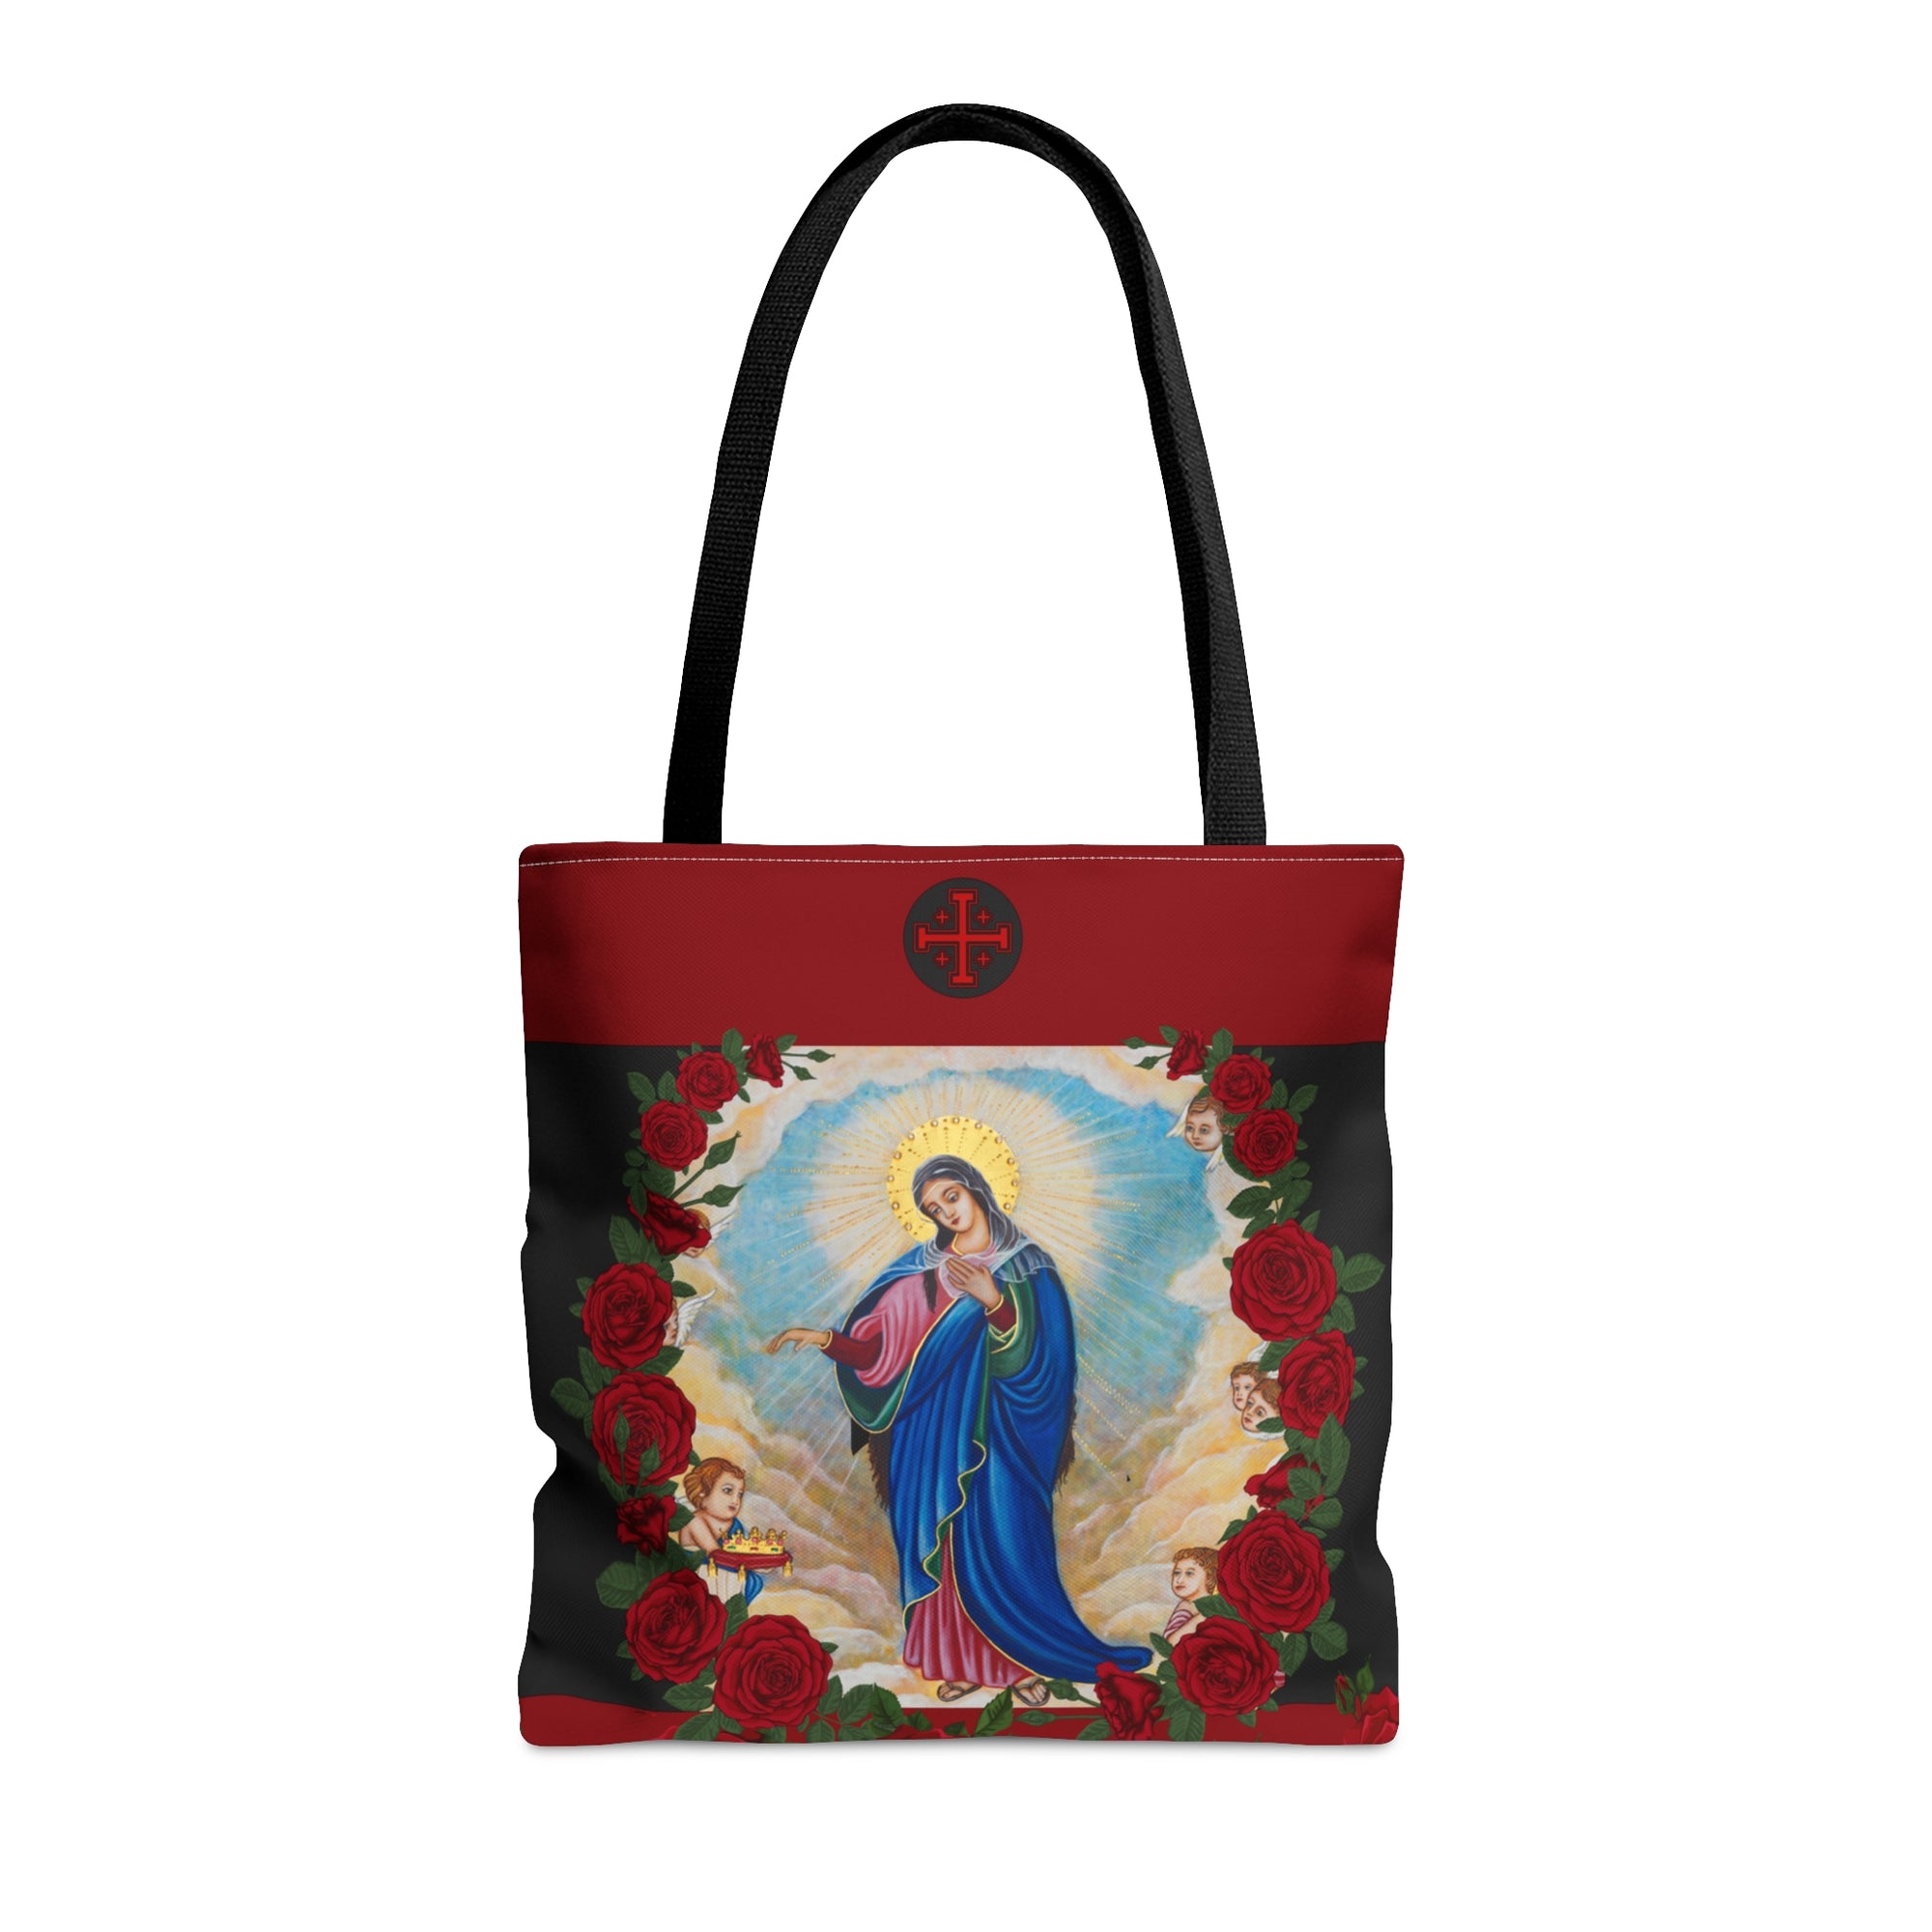 EOHSJ - Our Lady of Palestine 16"x16" Tote Bag